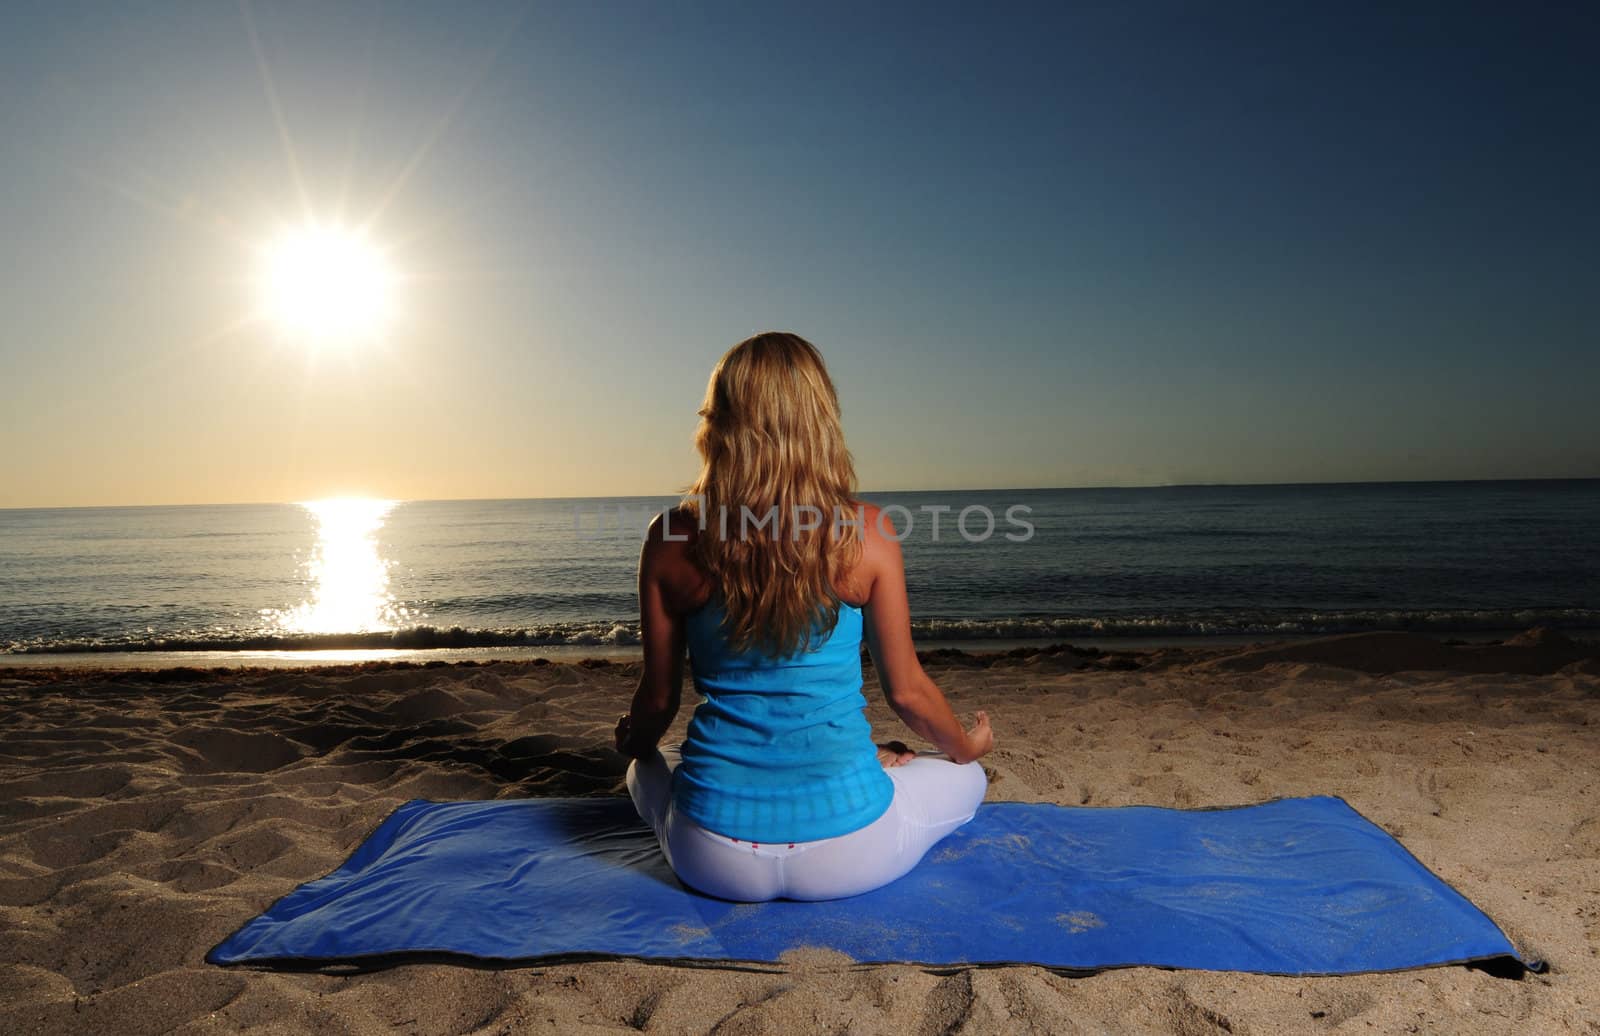 Meditation on beach with ocean and beautiful sunrise